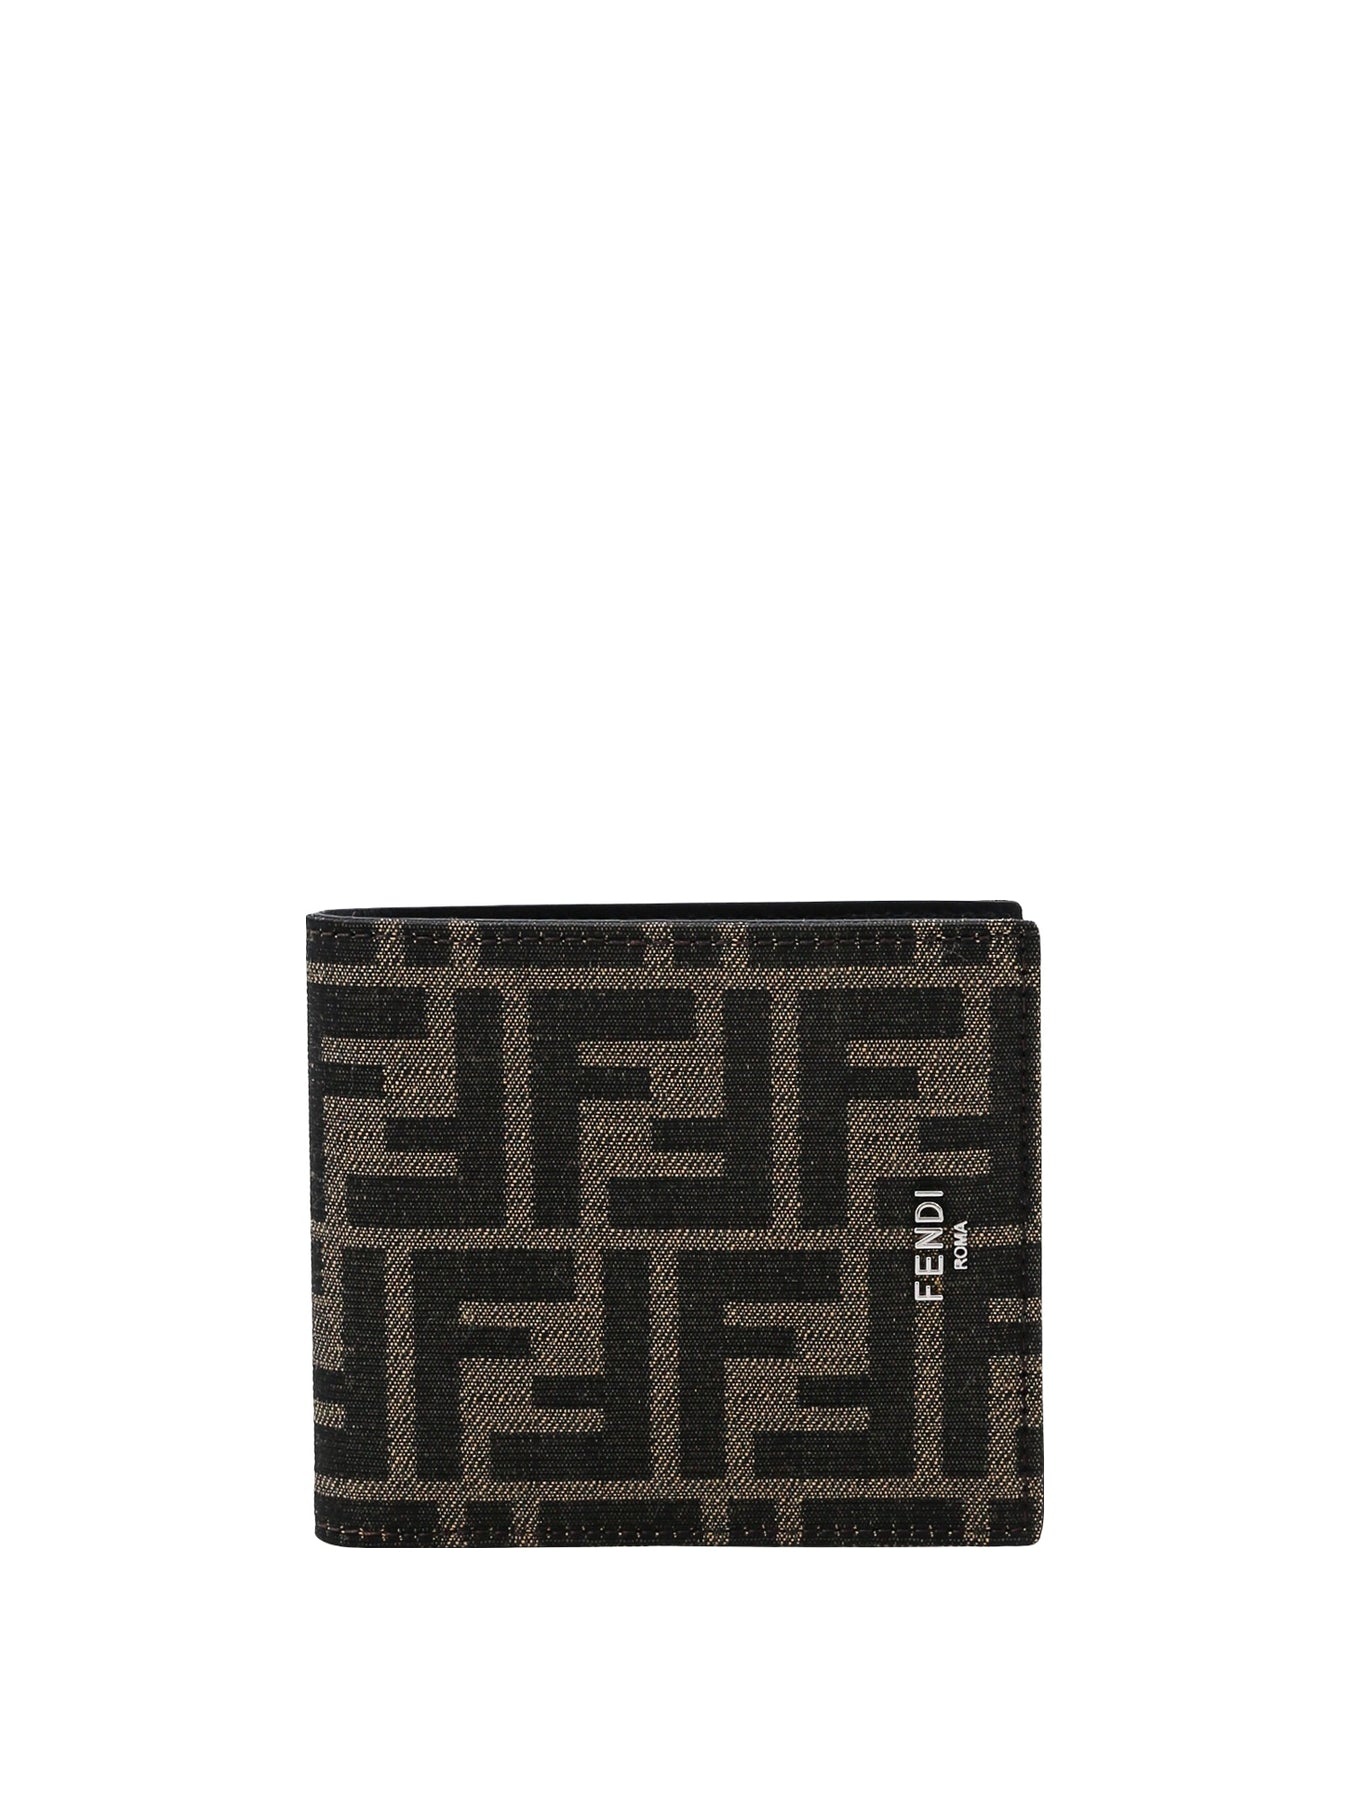 FF fabric wallet - 1